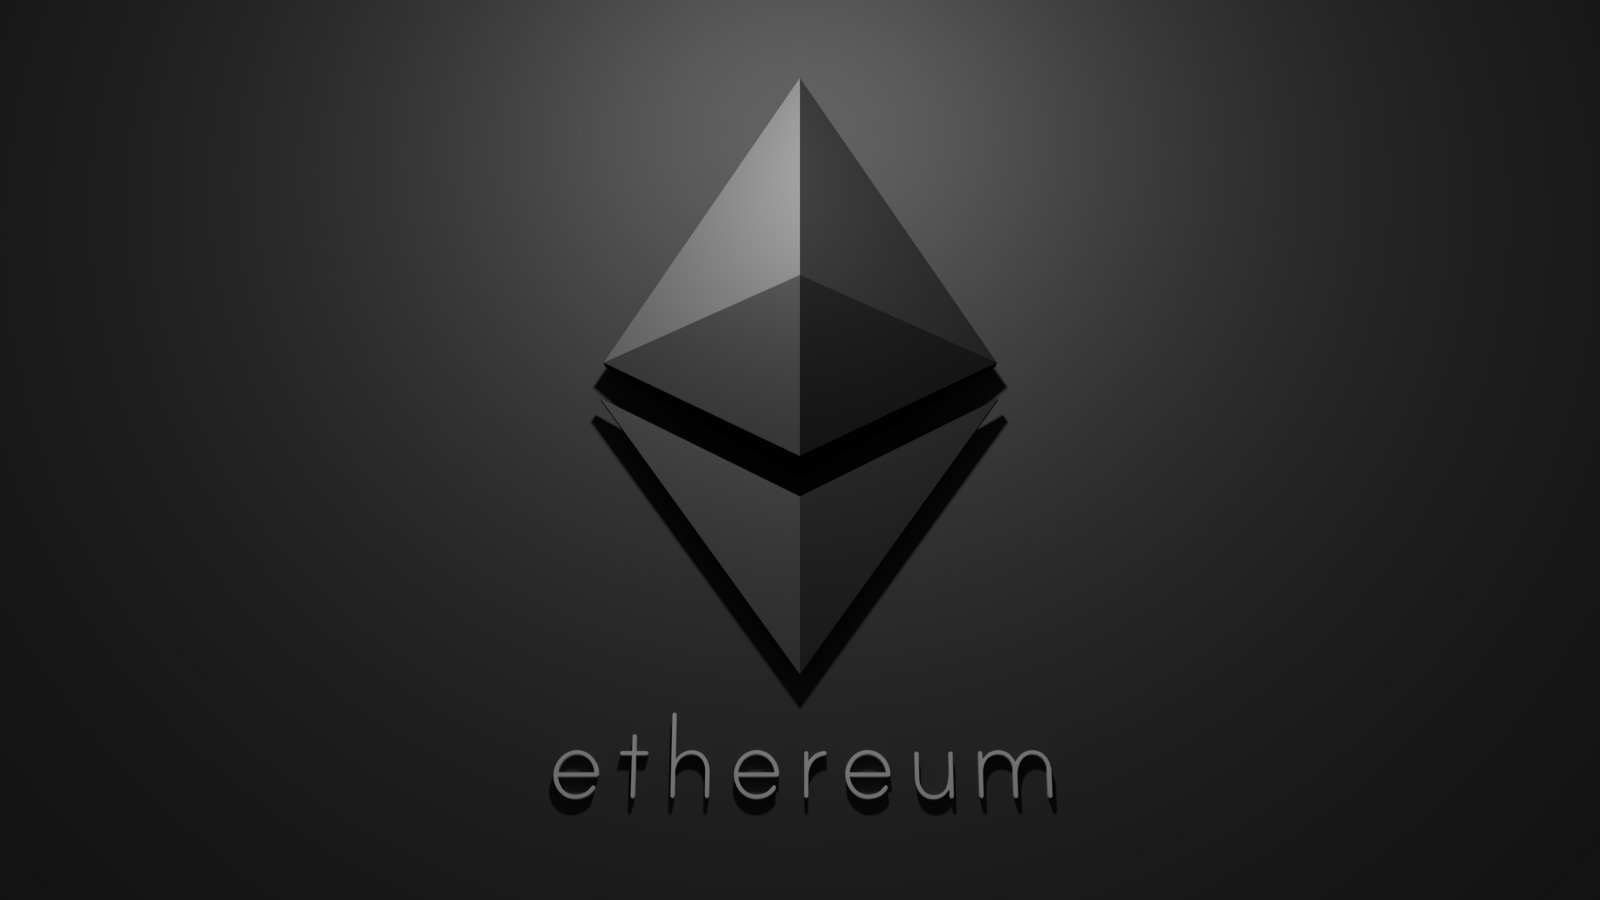 ico definition ethereum